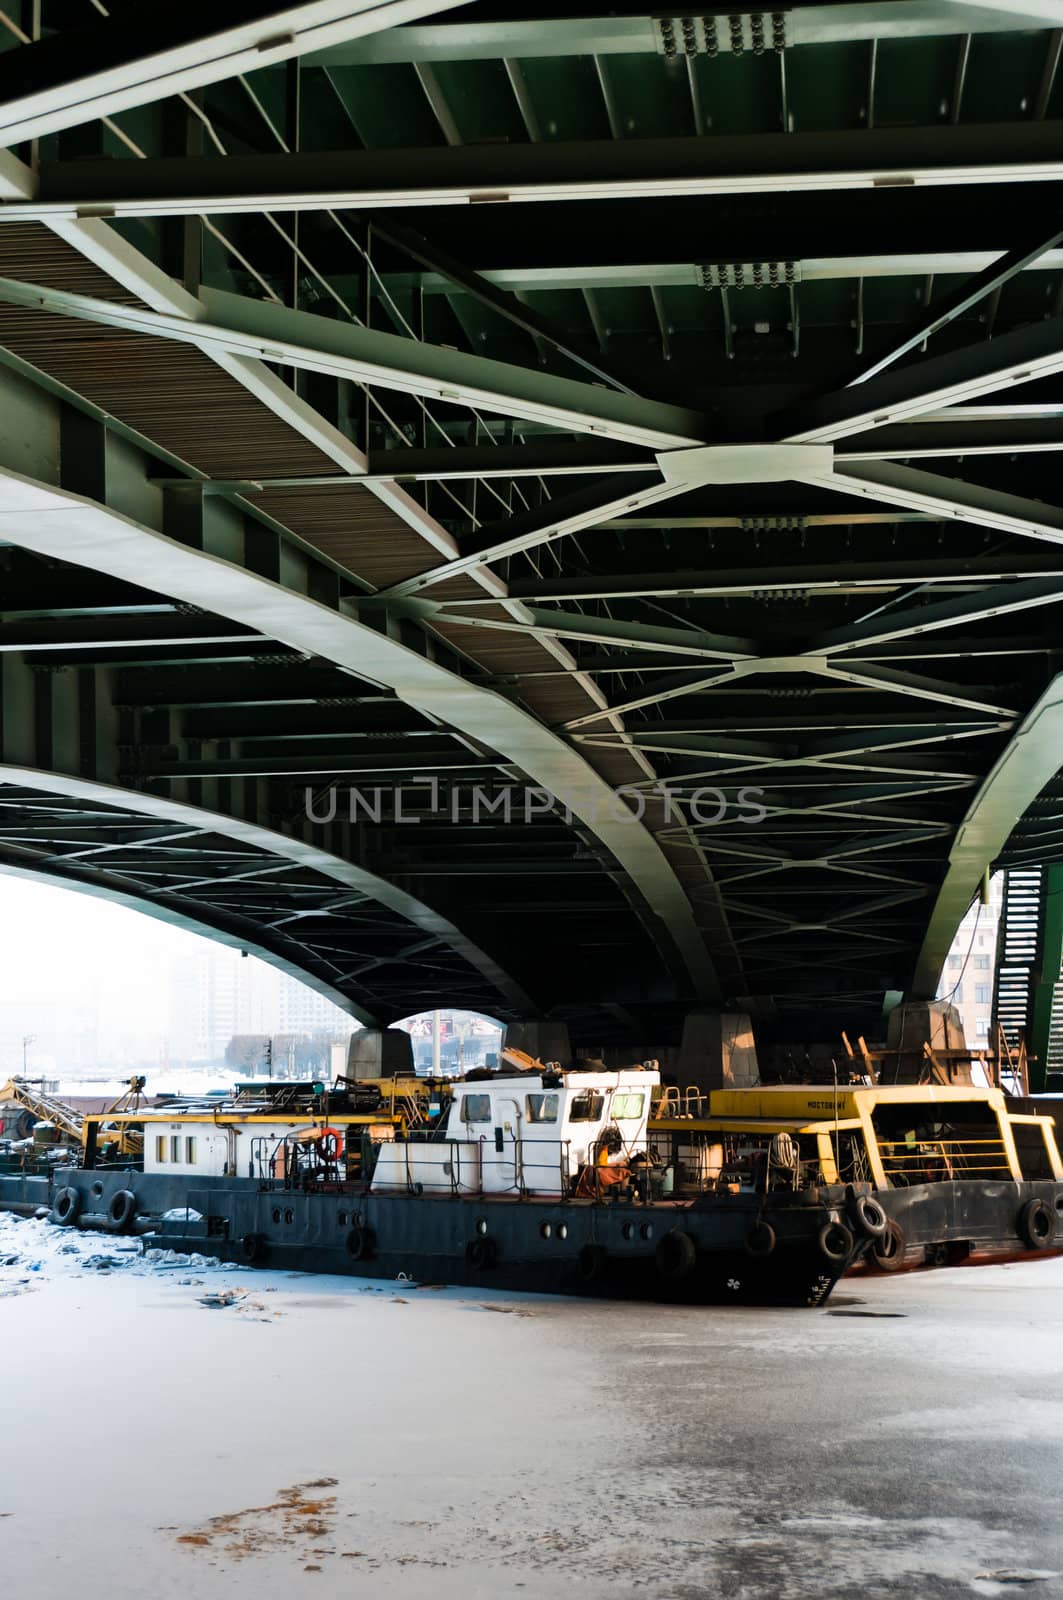 Tugs under the green bridge by dmitryelagin